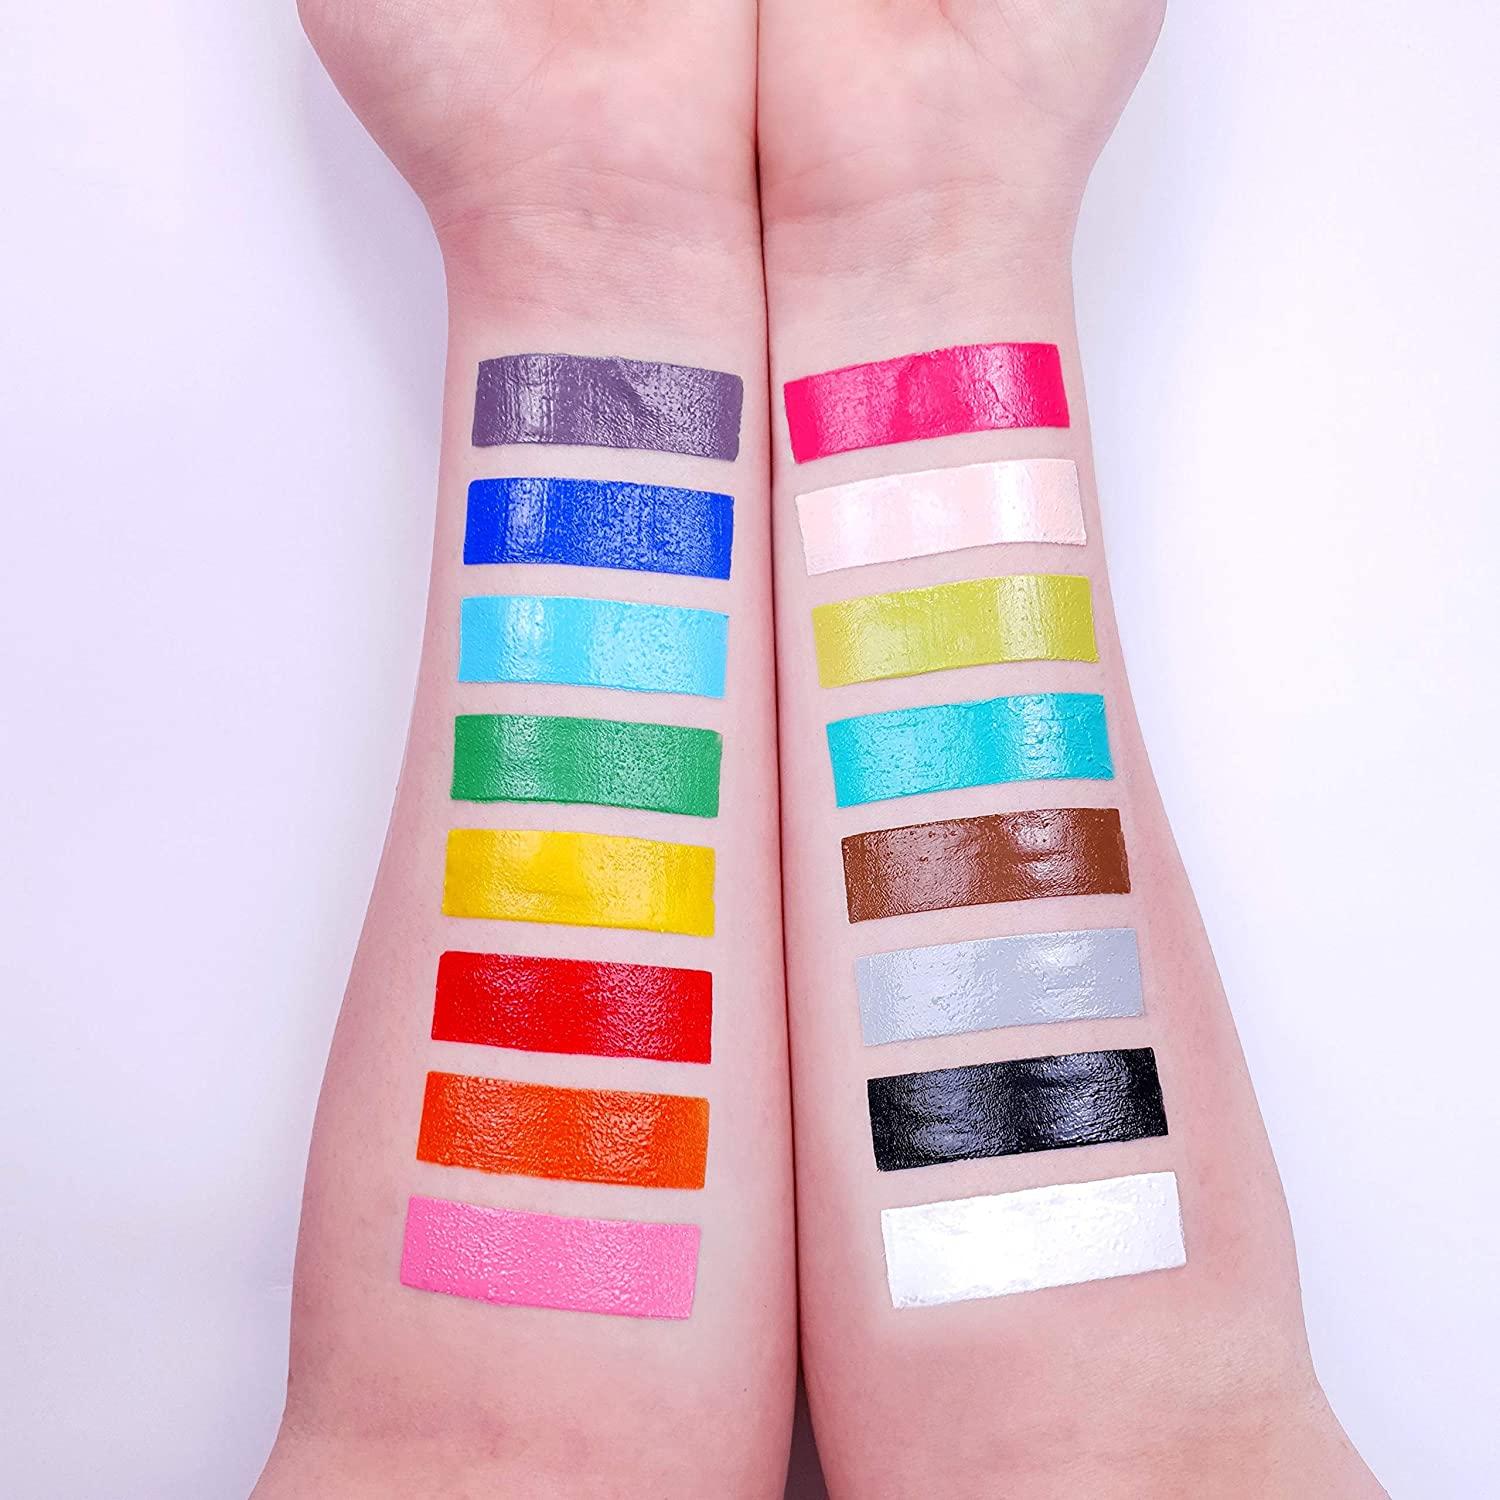 GLAMADOR 16 Colors Body Painting Sticks, Water-Based Makeup Crayons Se –  Luckyfine